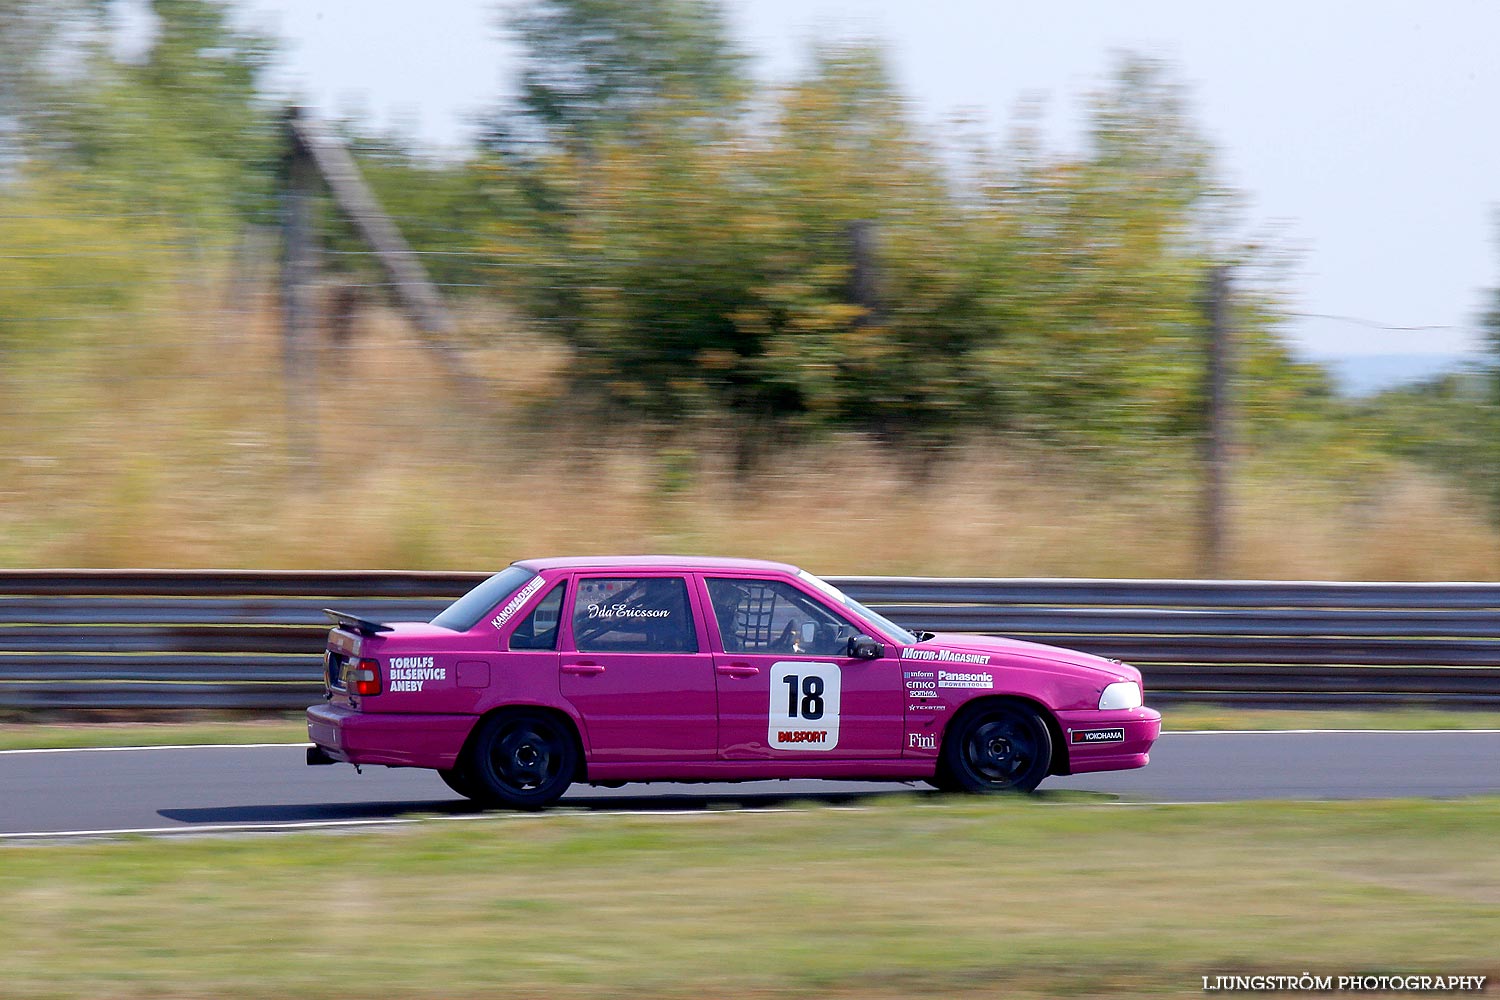 SSK Raceweek,mix,Kinnekulle Ring,Götene,Sverige,Motorsport,,2014,90516